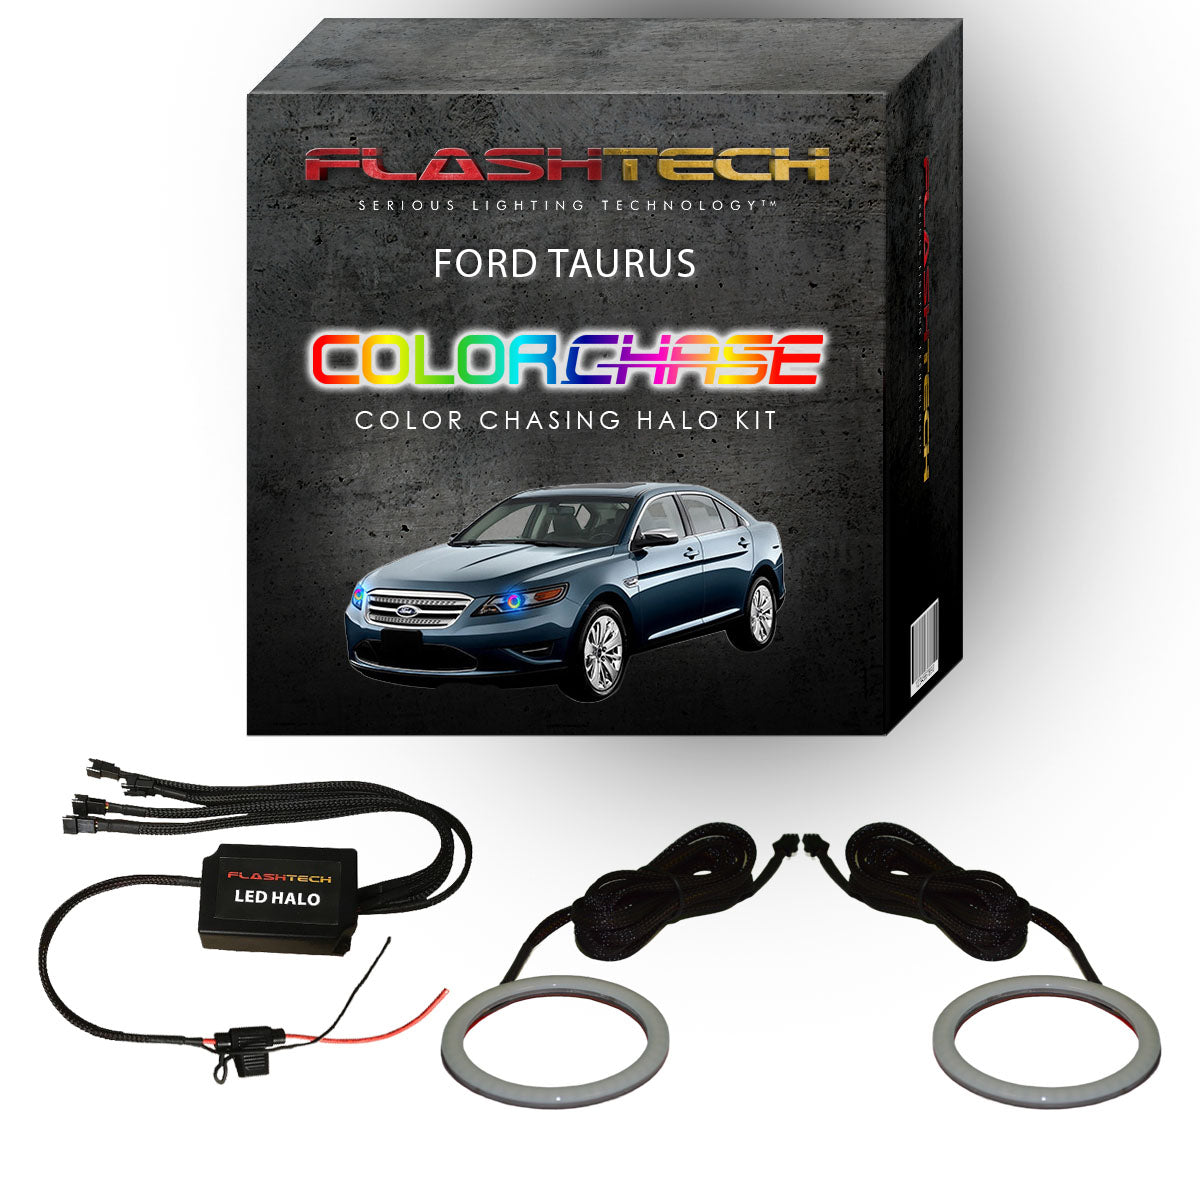 Ford Taurus ColorChase LED Halo Headlight Kit 2010-2012